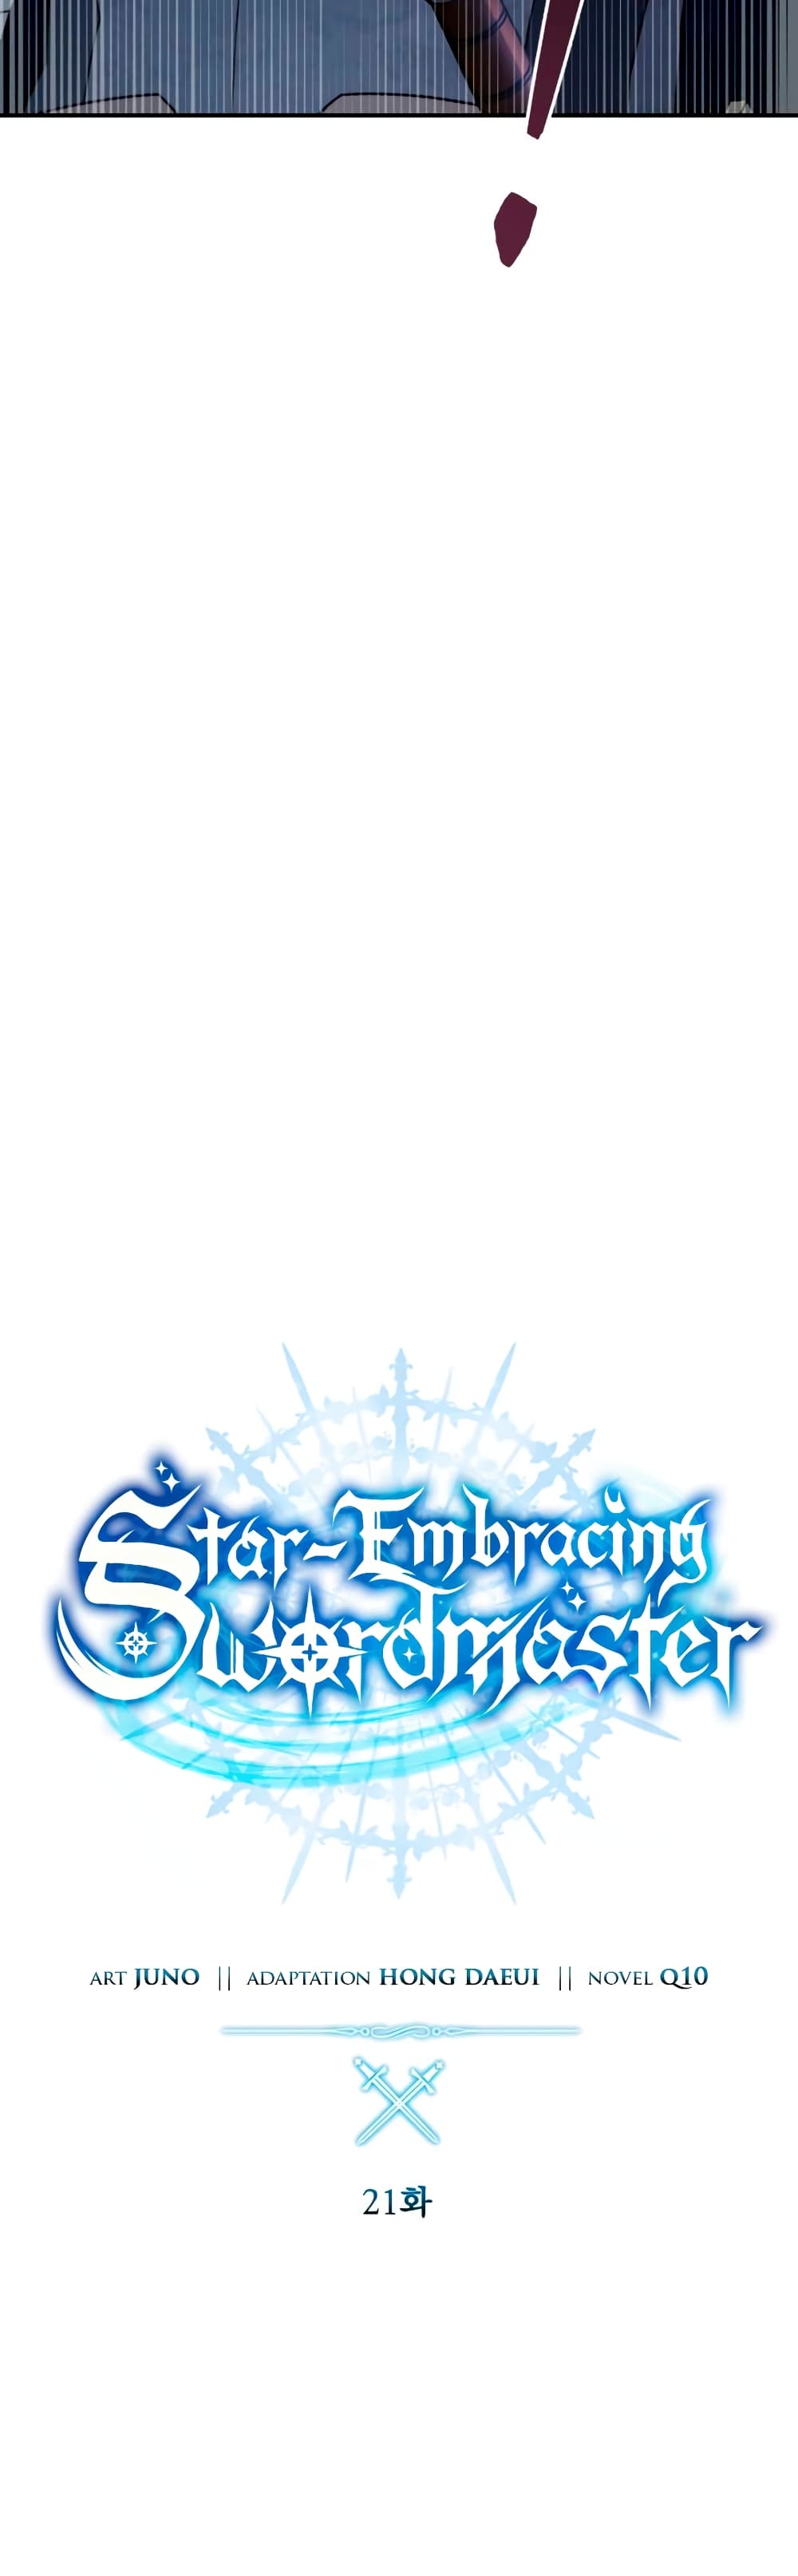 Star-Embracing Swordmaster 21-21